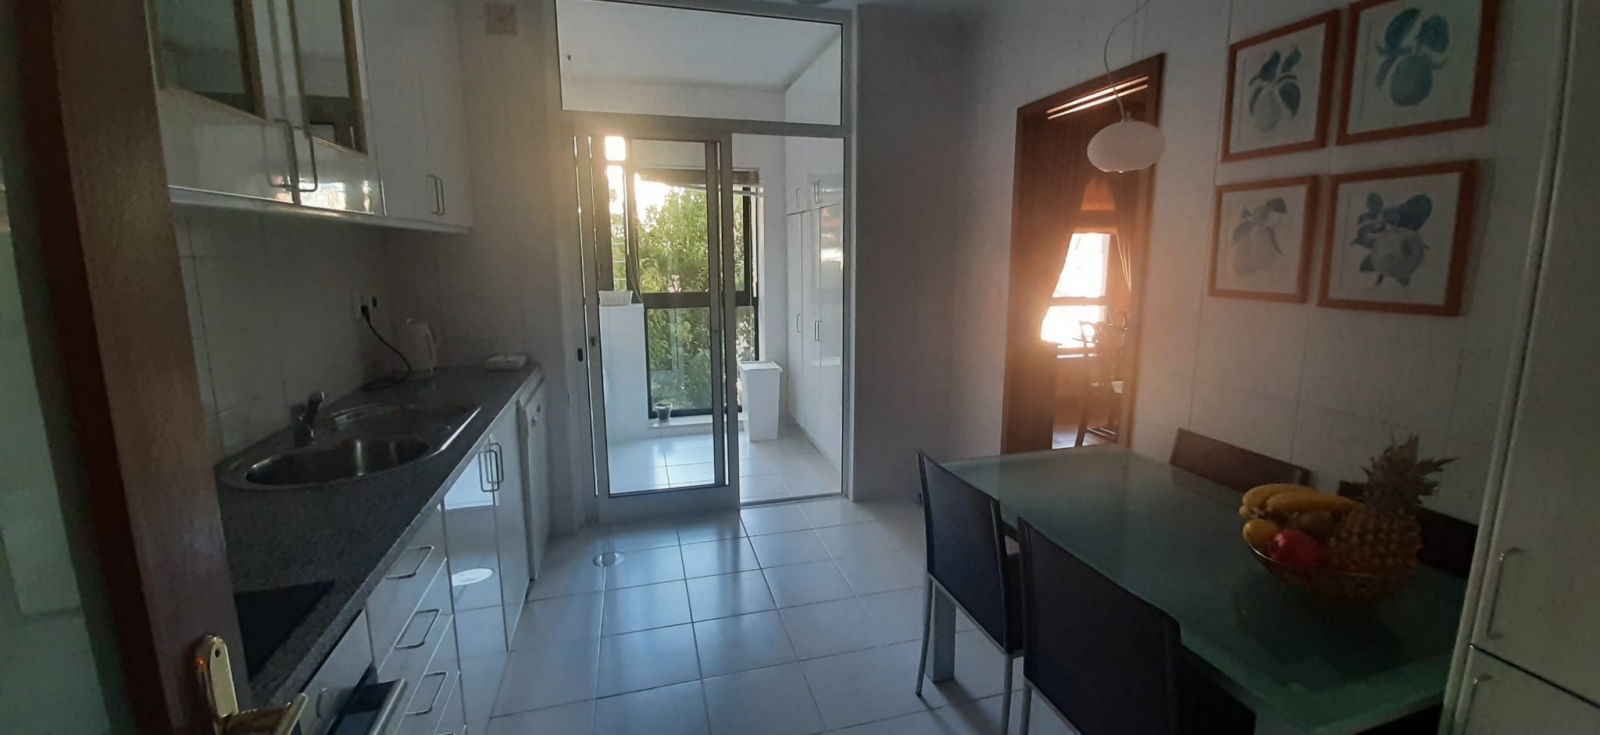 Apartamento T3 Duplex, para venda, na Boavista, Porto_180796